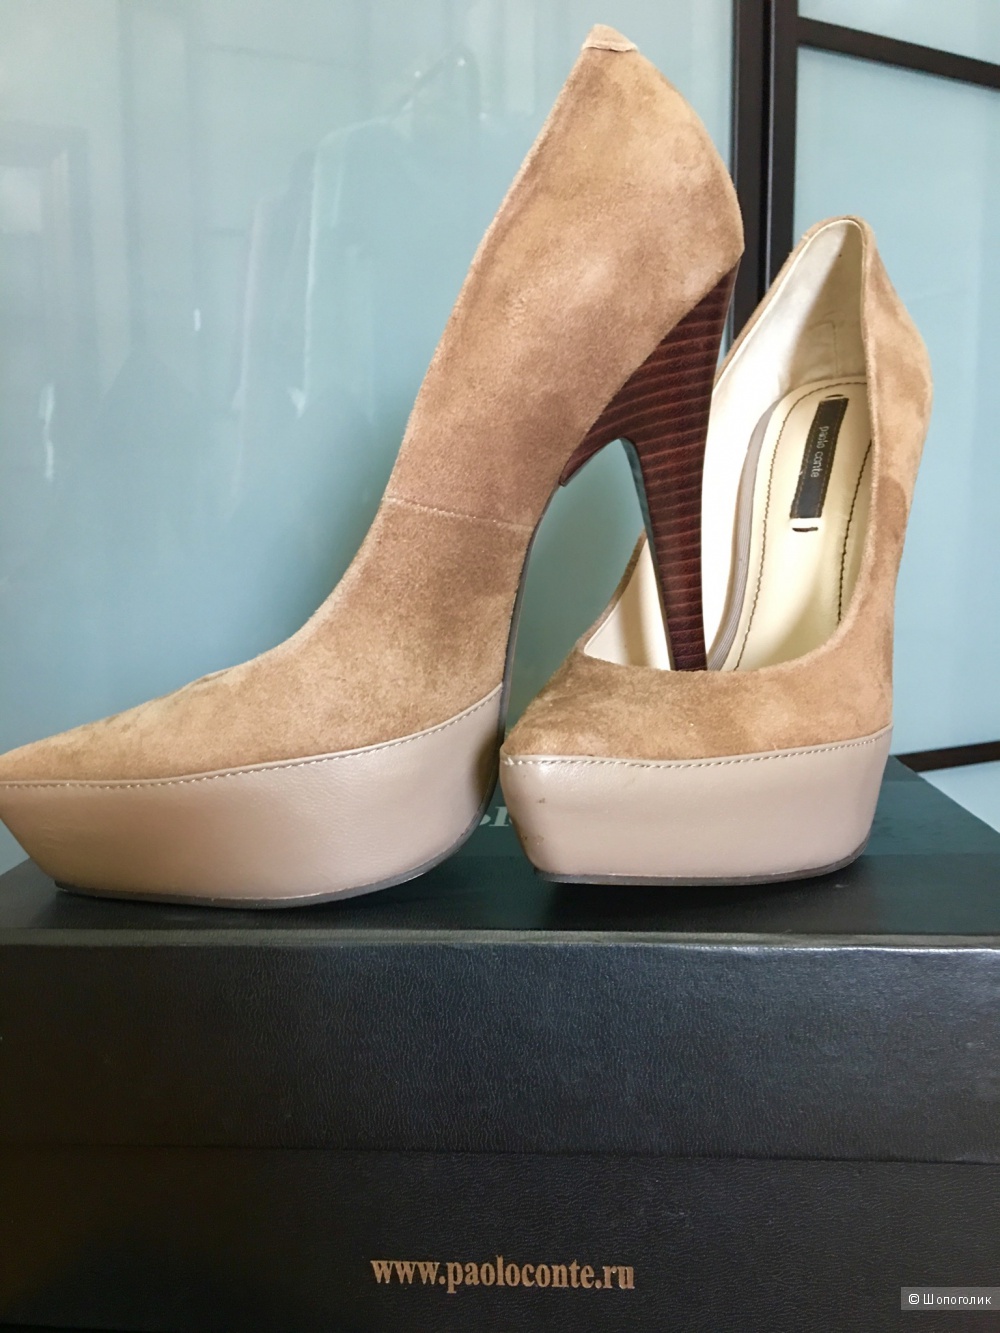 Новые Туфли замшевые+кожа, Paolo Conte, 39 размер